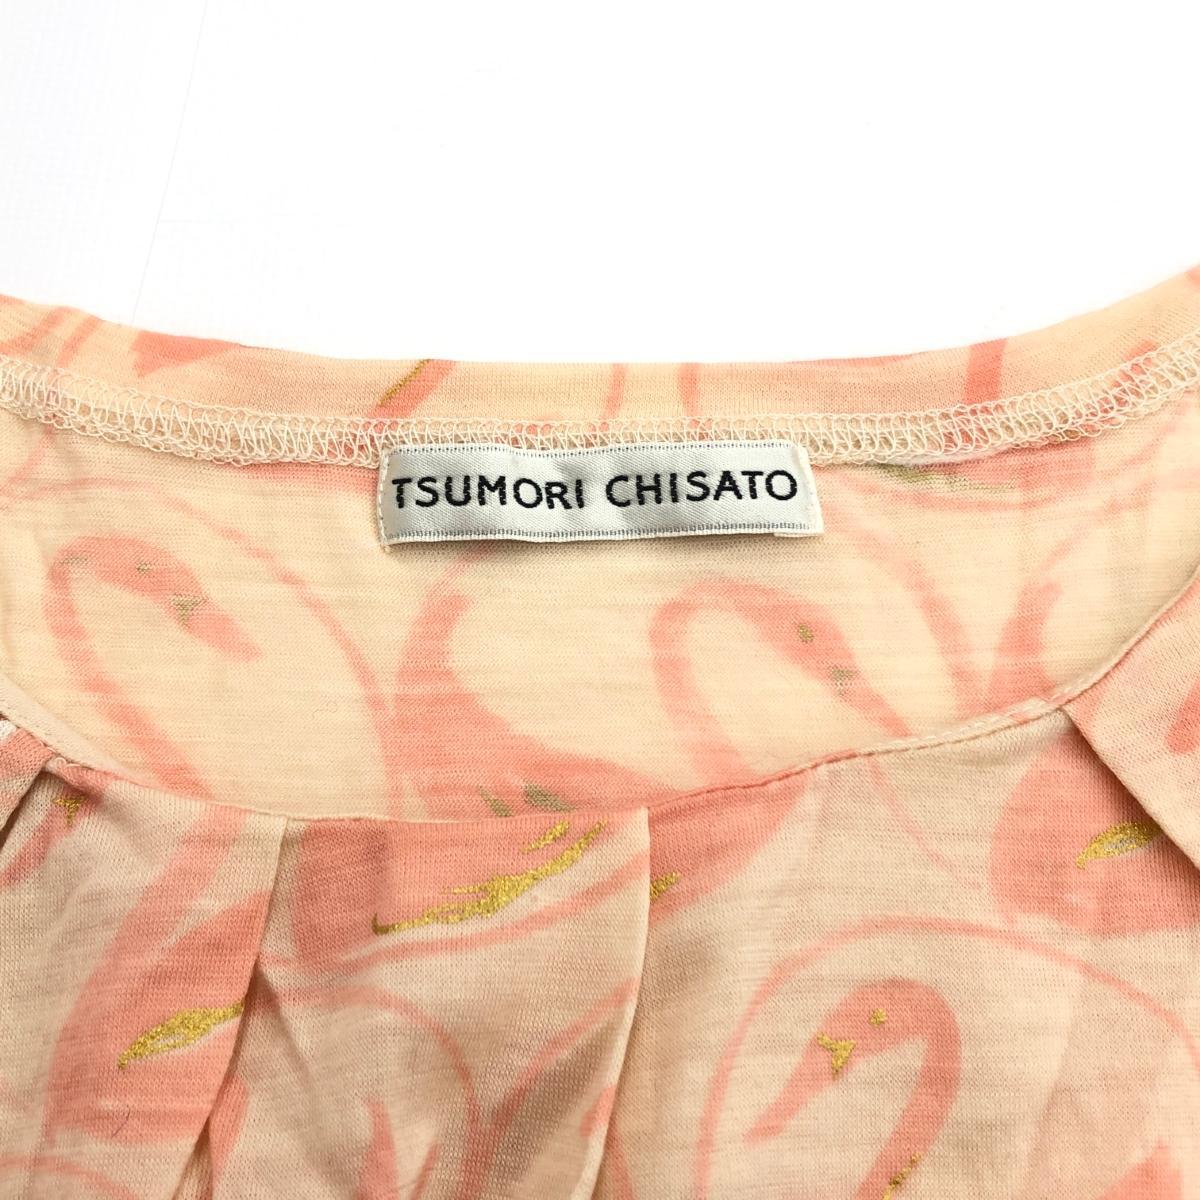  excellent *tsumori chisato Tsumori Chisato cut and sewn size 2* Pink Lady -s tops 